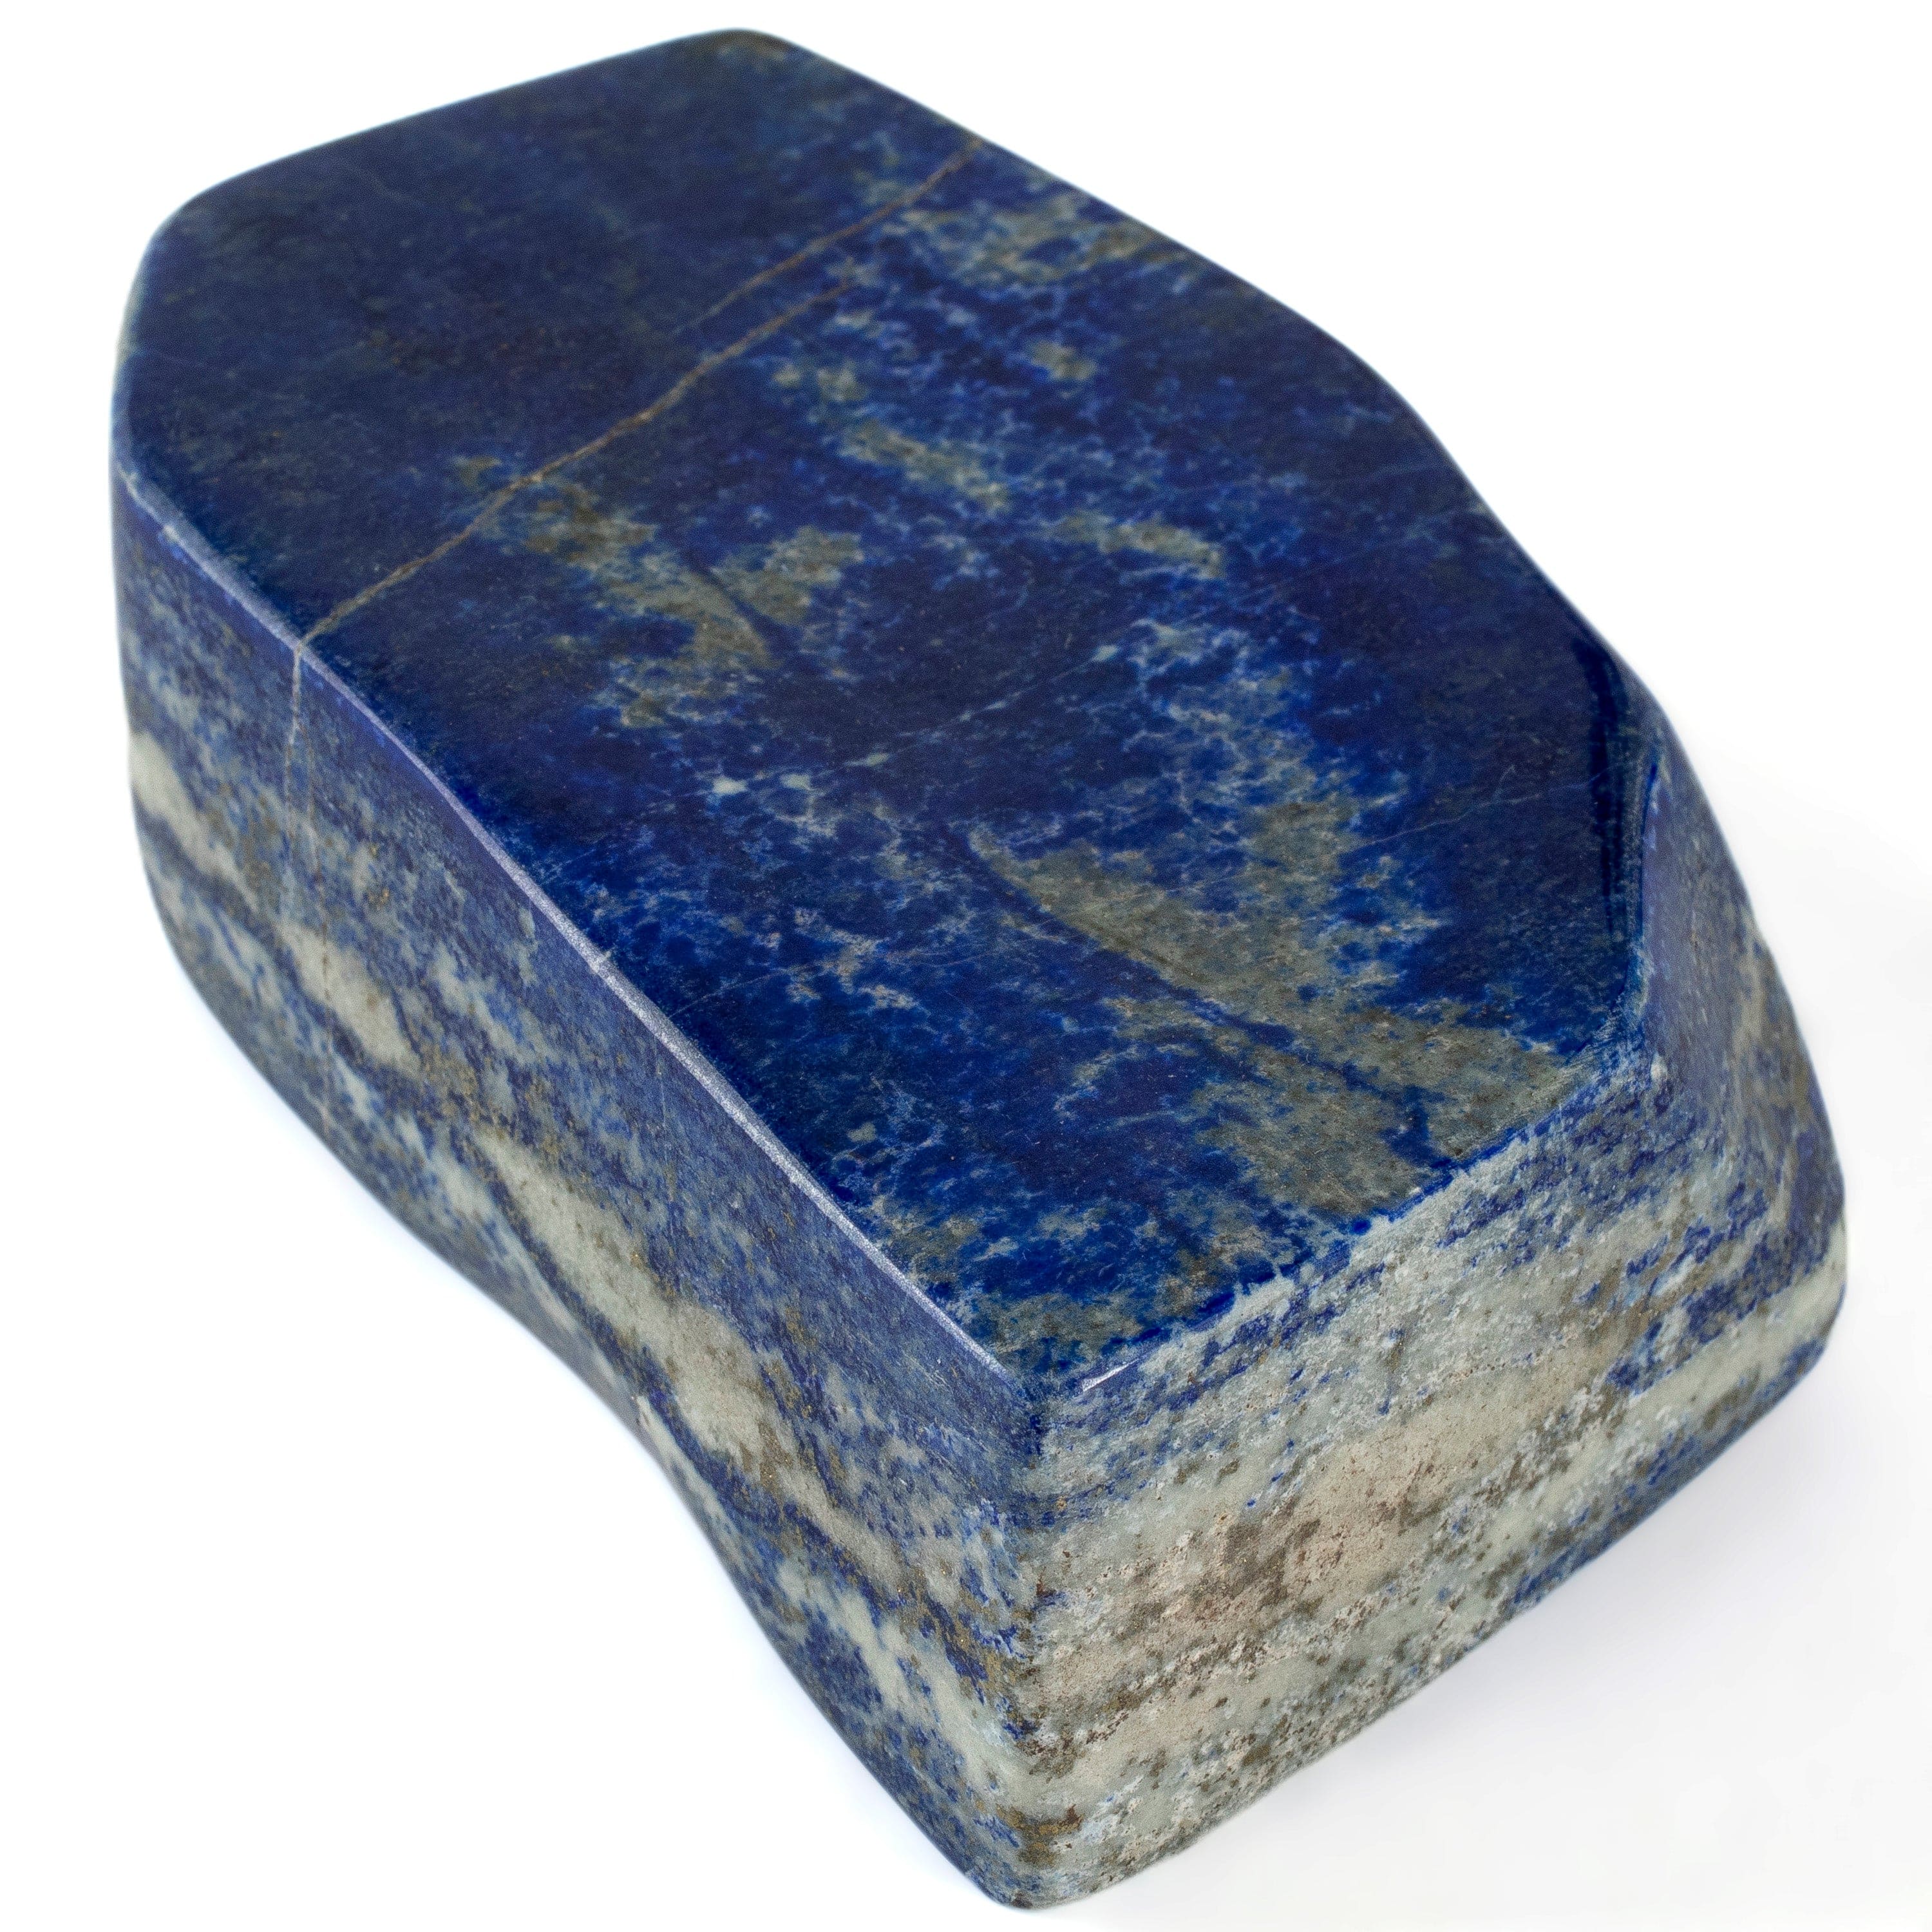 Kalifano Lapis Lapis Lazuli Freeform from Afghanistan - 6" / 2,030. grams LP2050.001